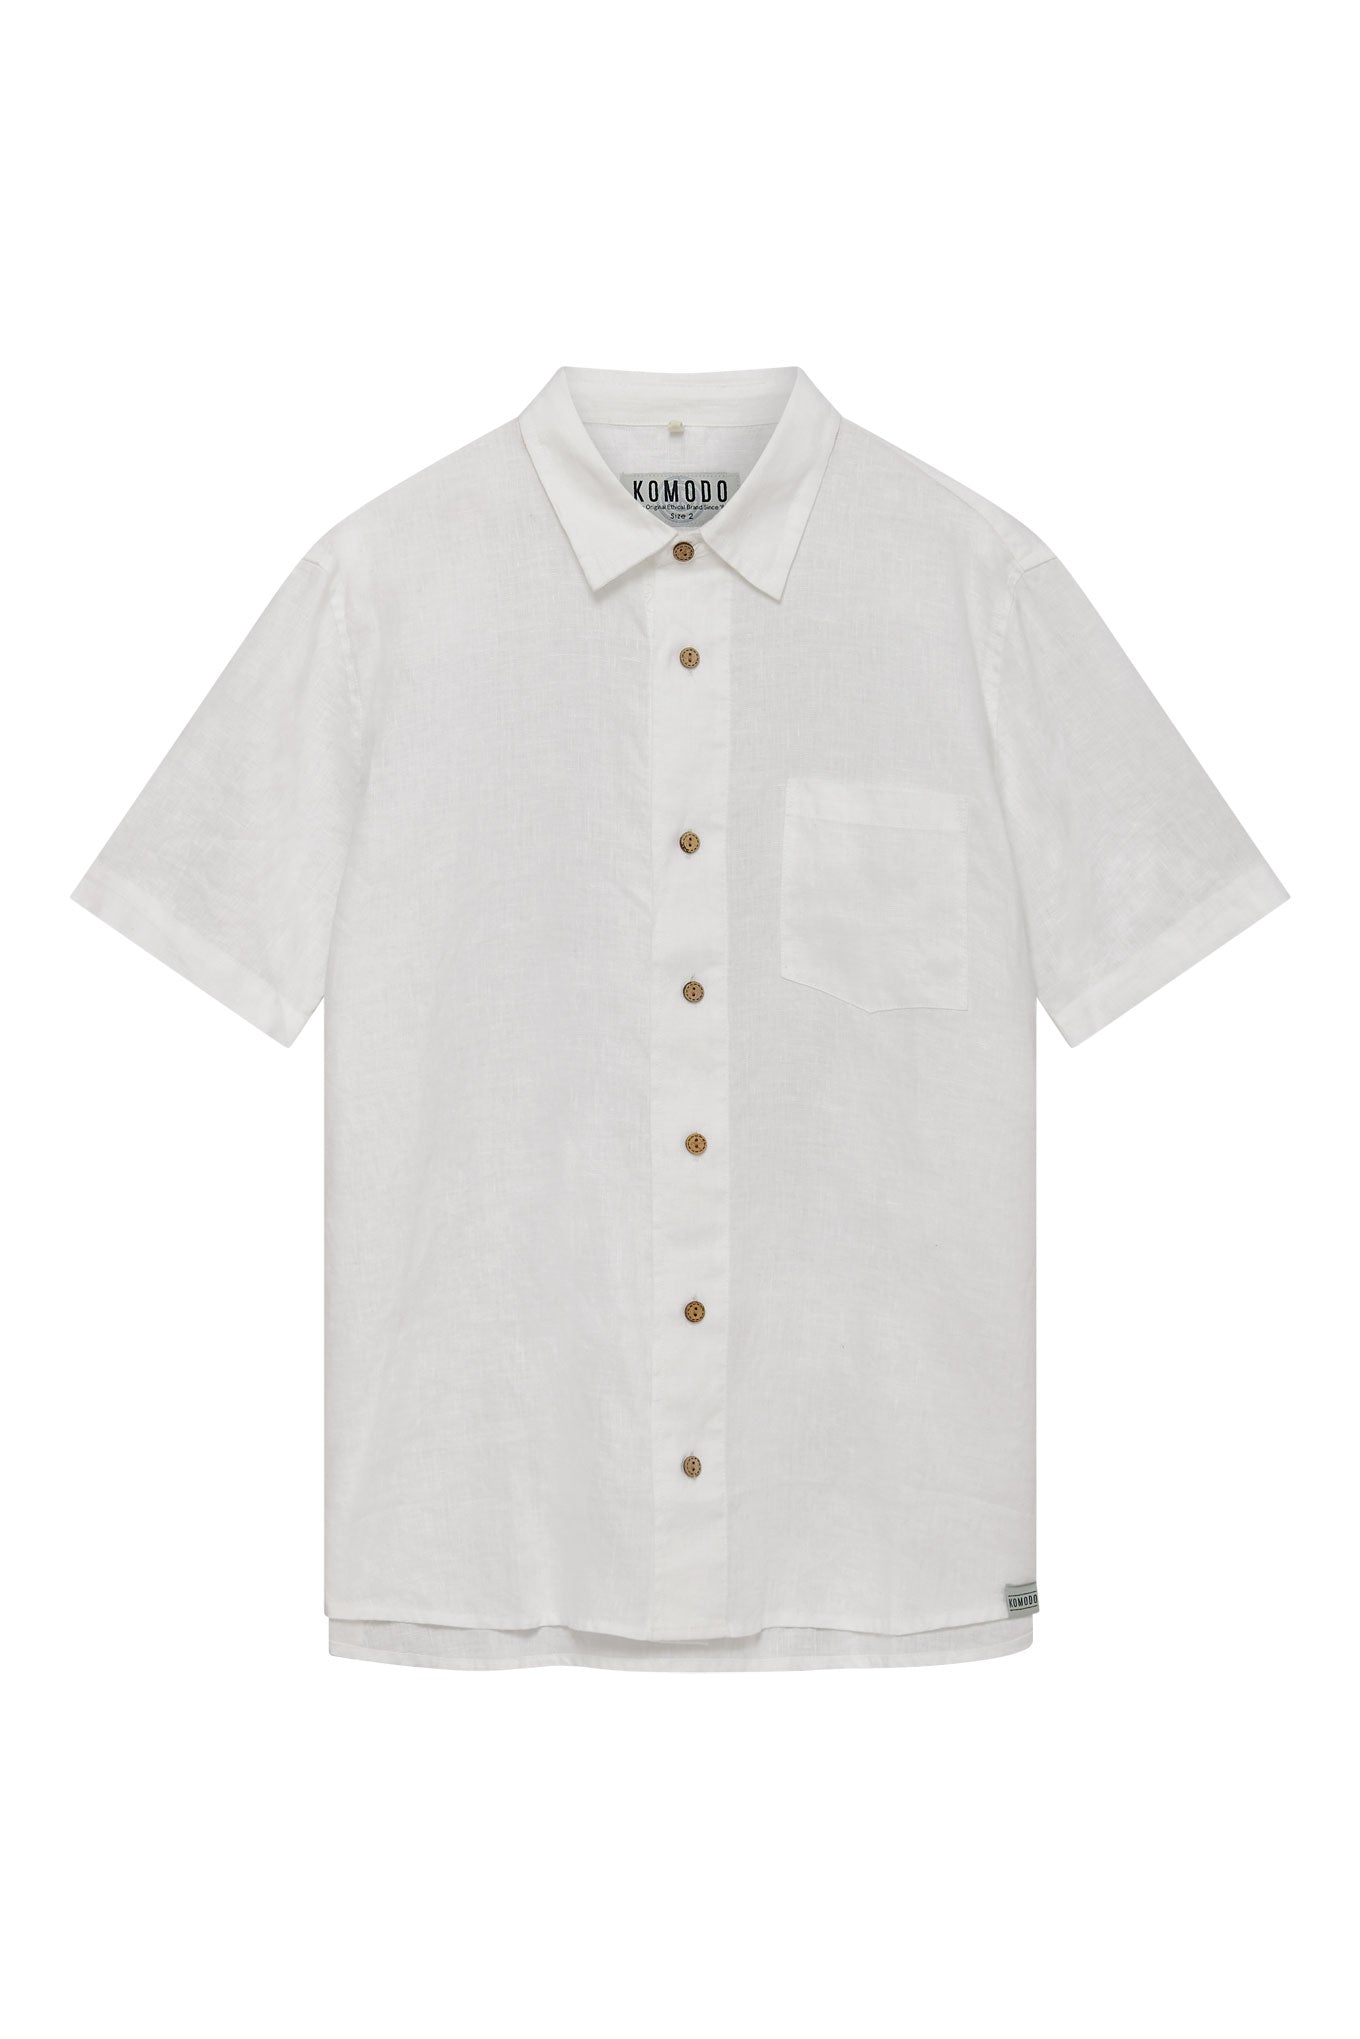 DINGWALLS - Linen Shirt White